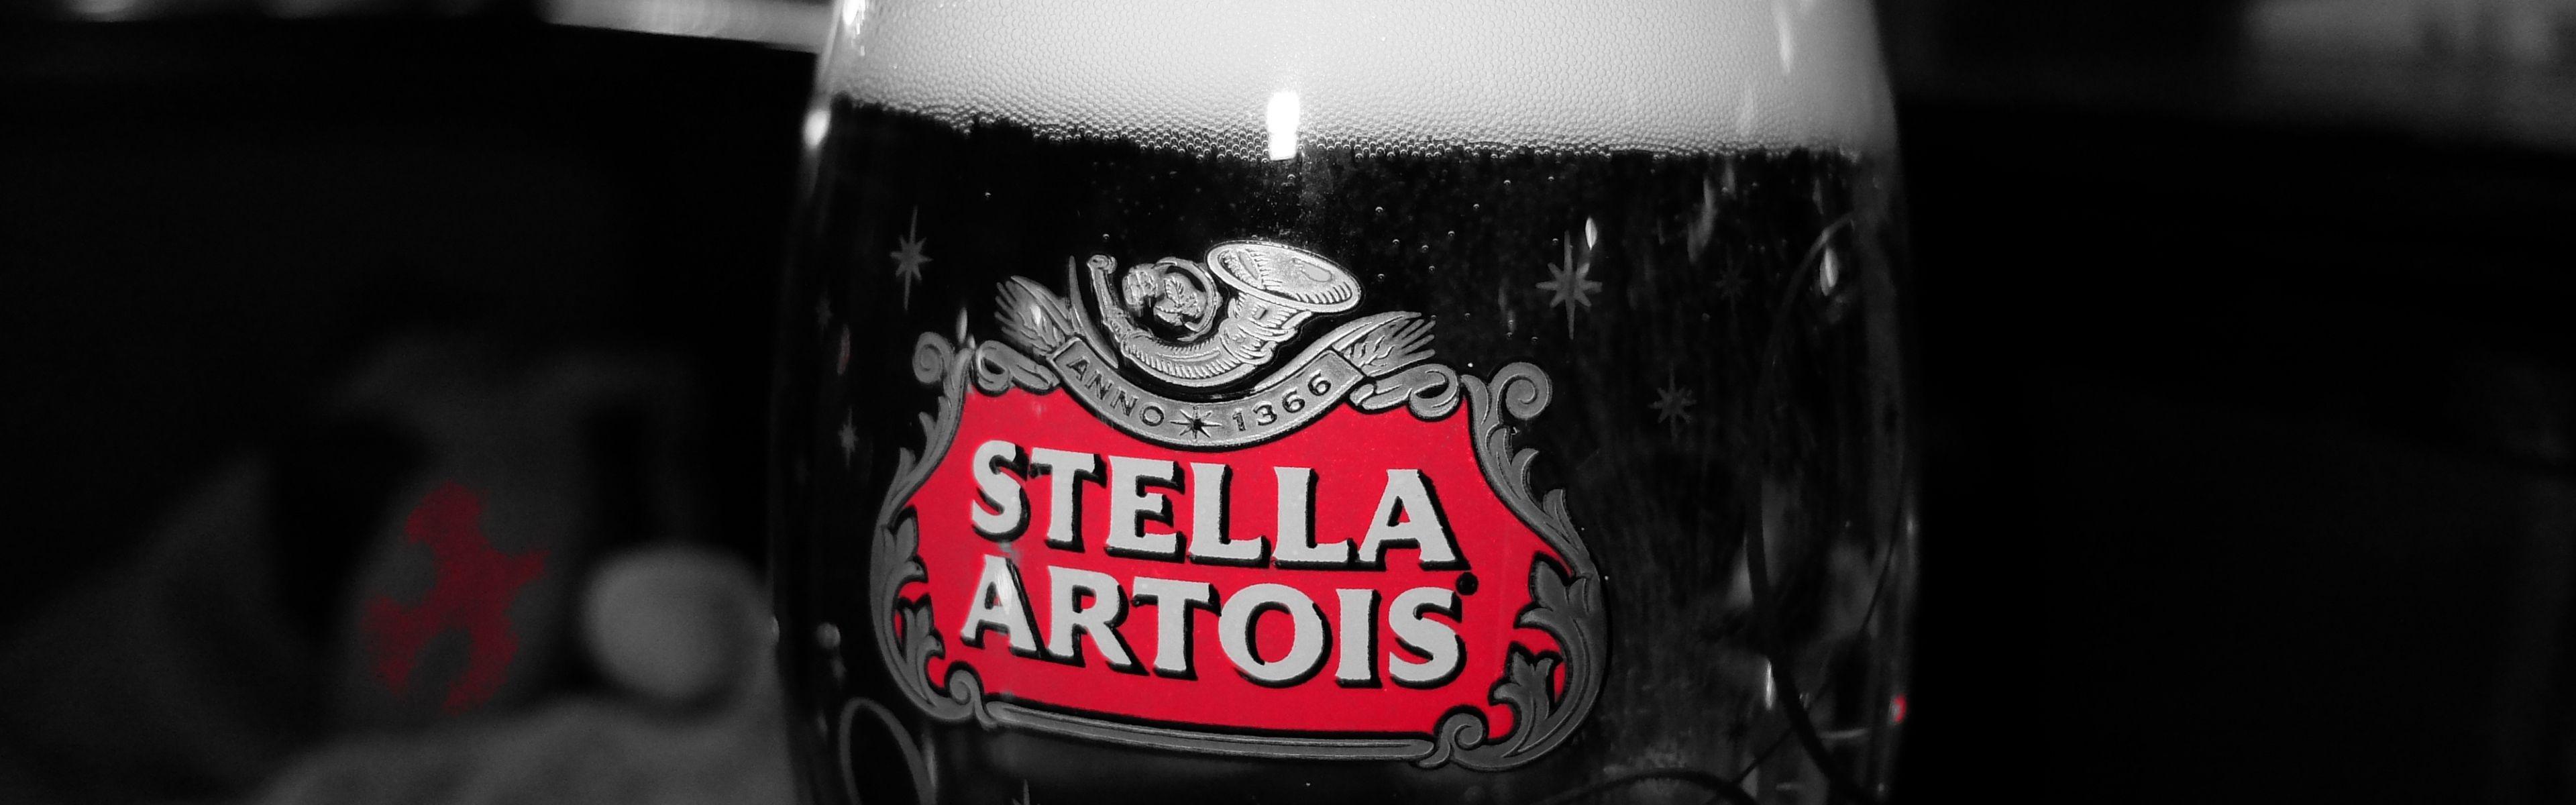 Download Wallpaper 3840x1200 Stella artois, Beer, Alcohol, Glass